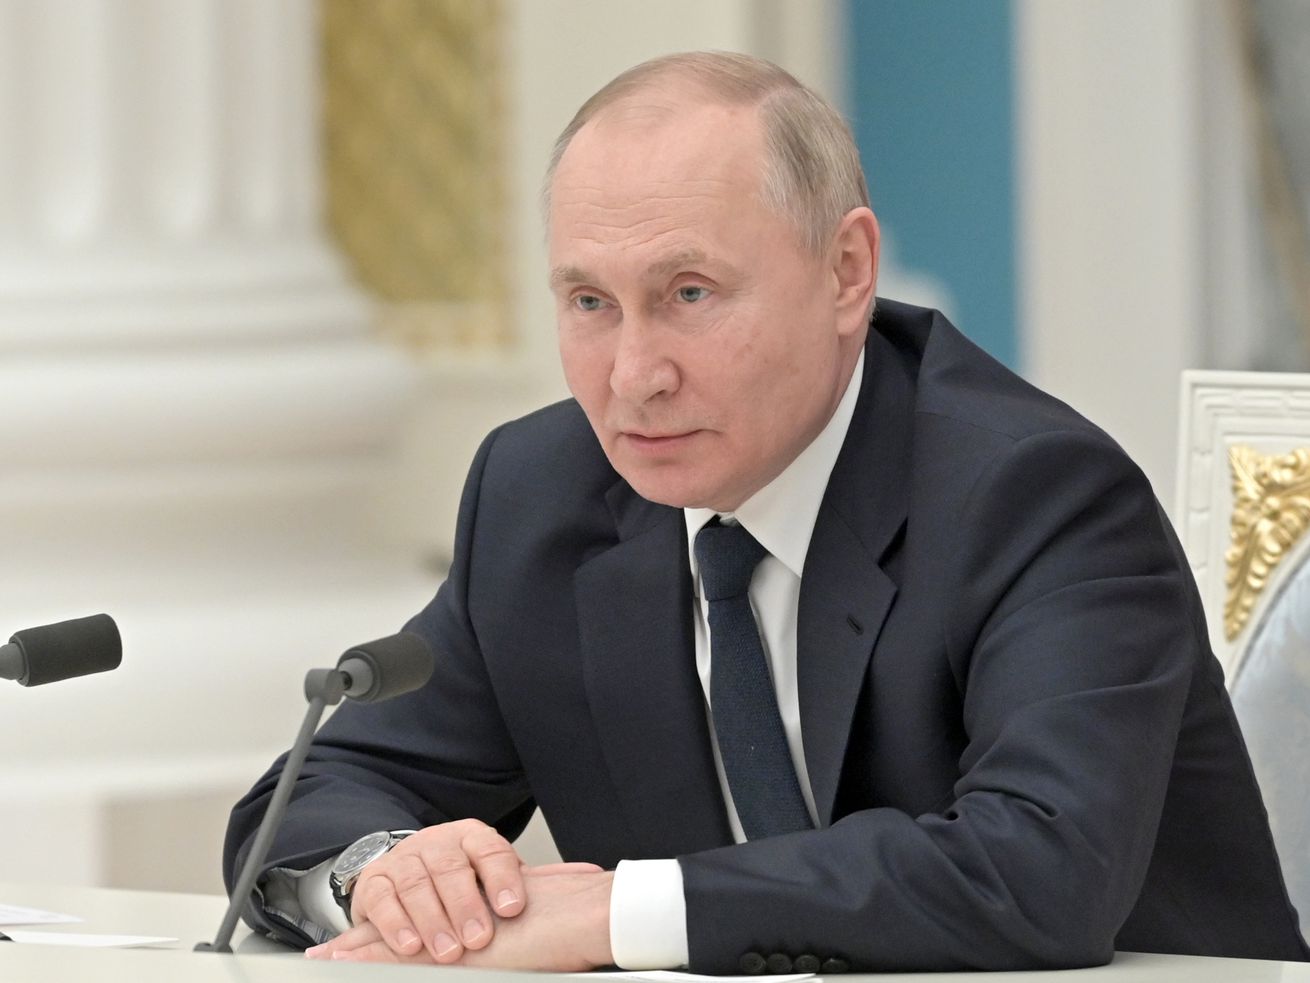 Vladimir Putin sits in a meeting.